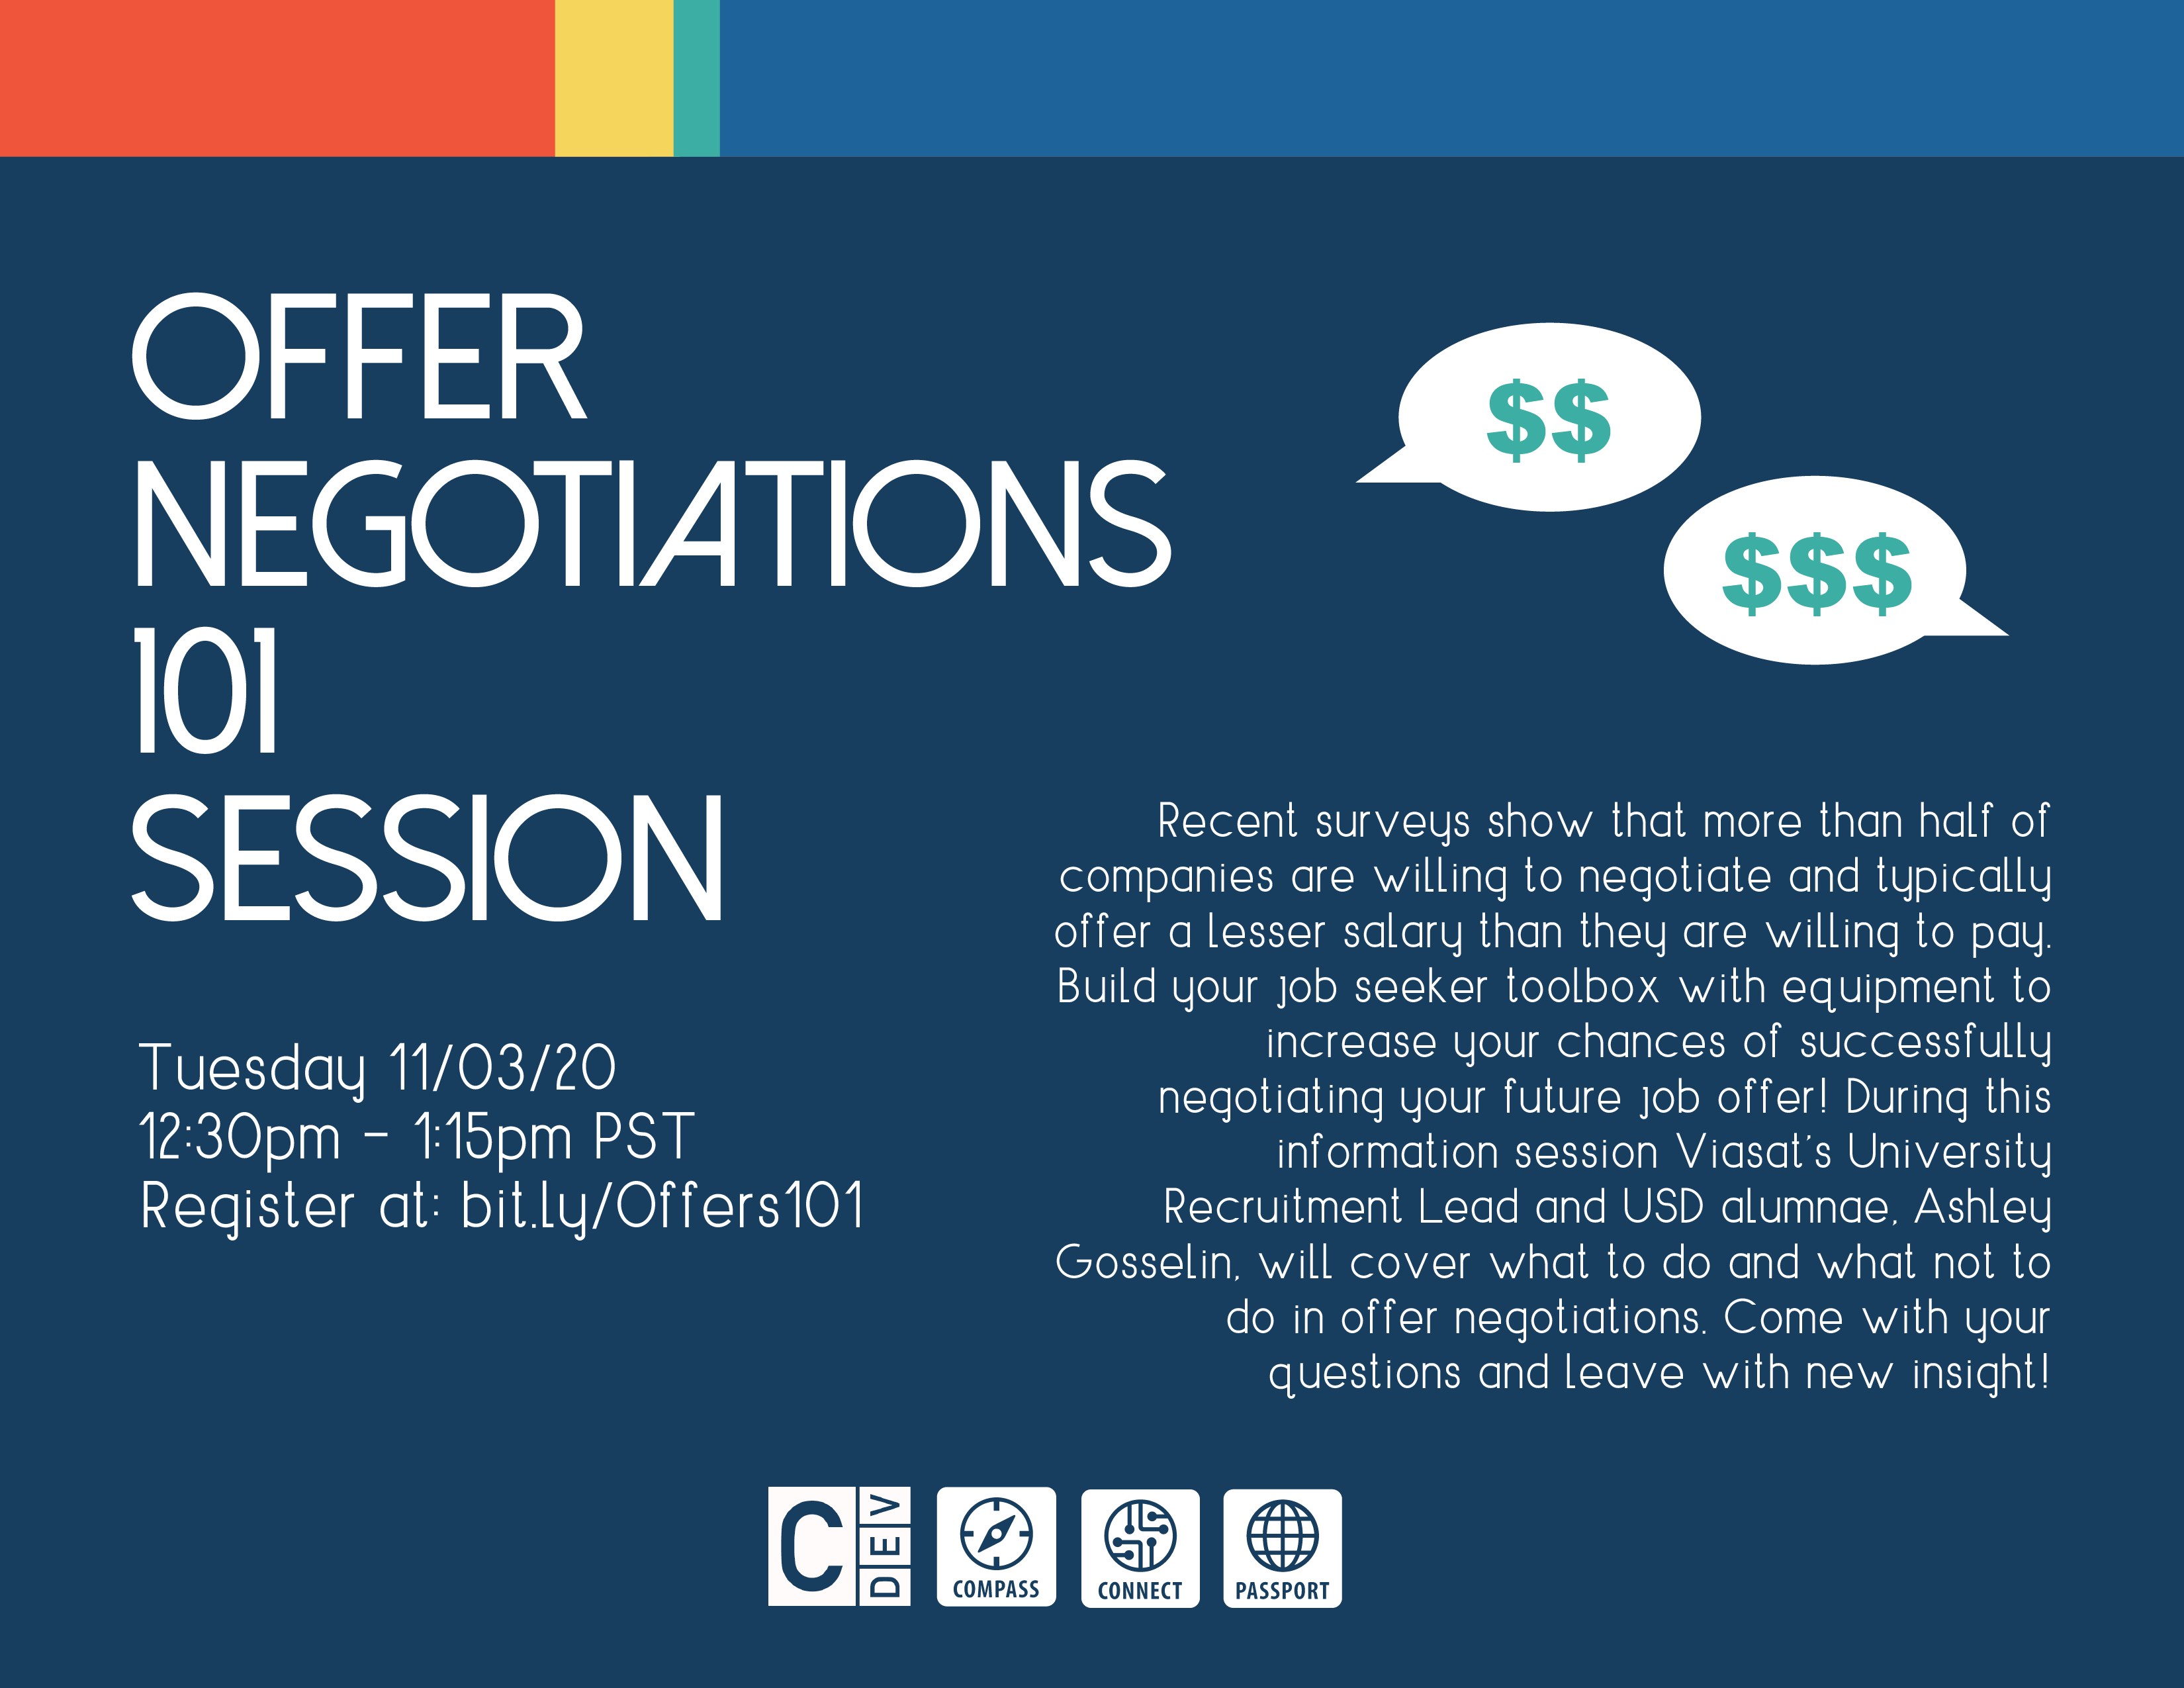 Offer Negotiations 101 Session flyer